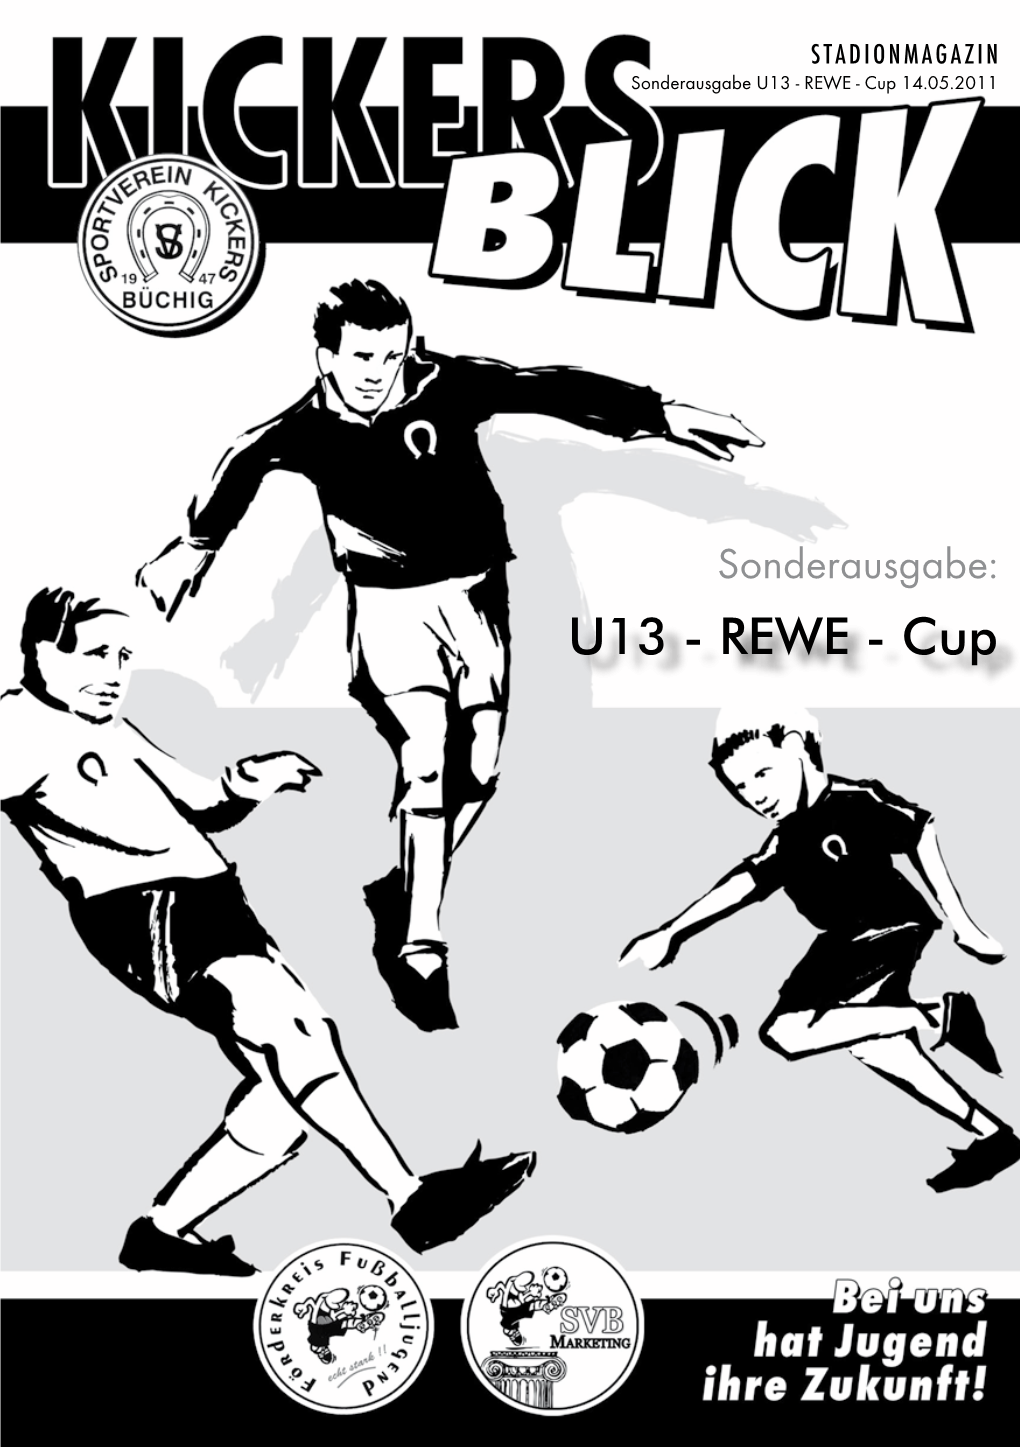 U13 - REWE - Cup 14.05.2011